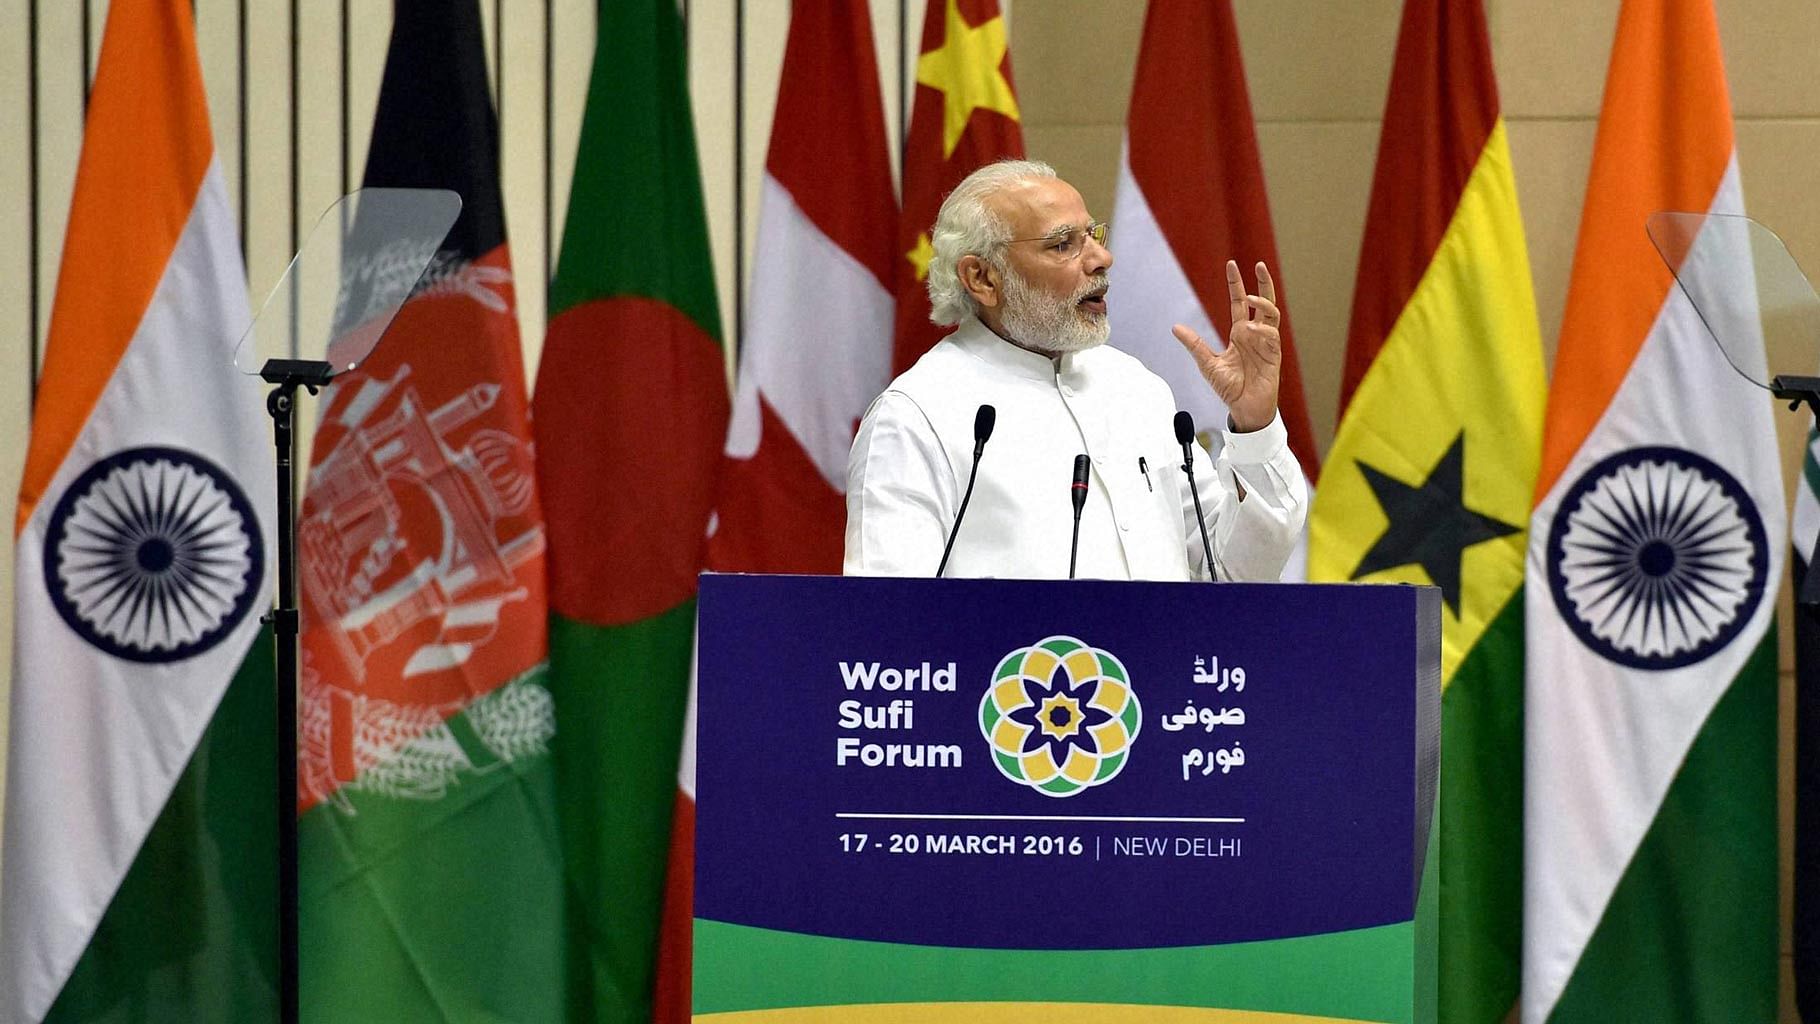 PM Modi at the inaugural address of World Sufi Forum. (Photo: PTI)